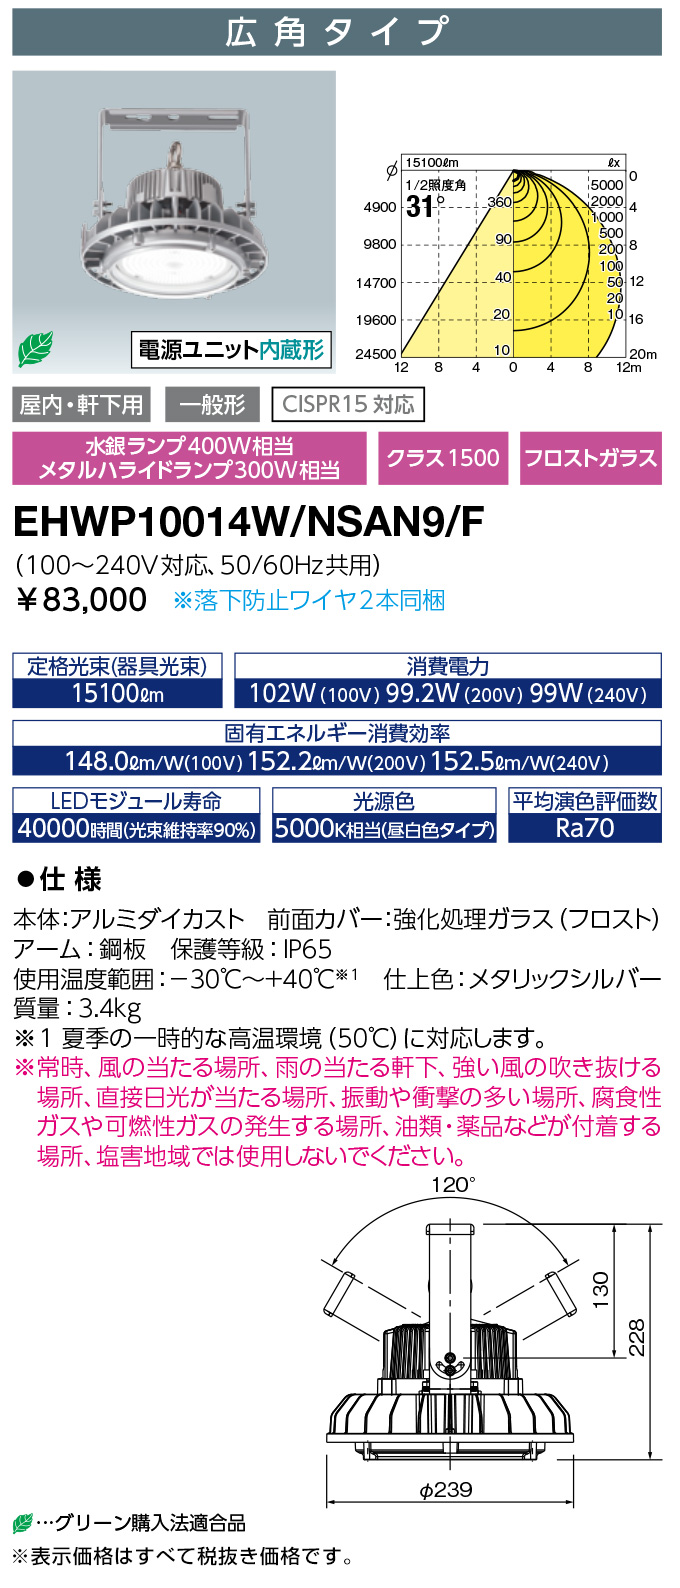 EHWP10014W-NSAN9-F